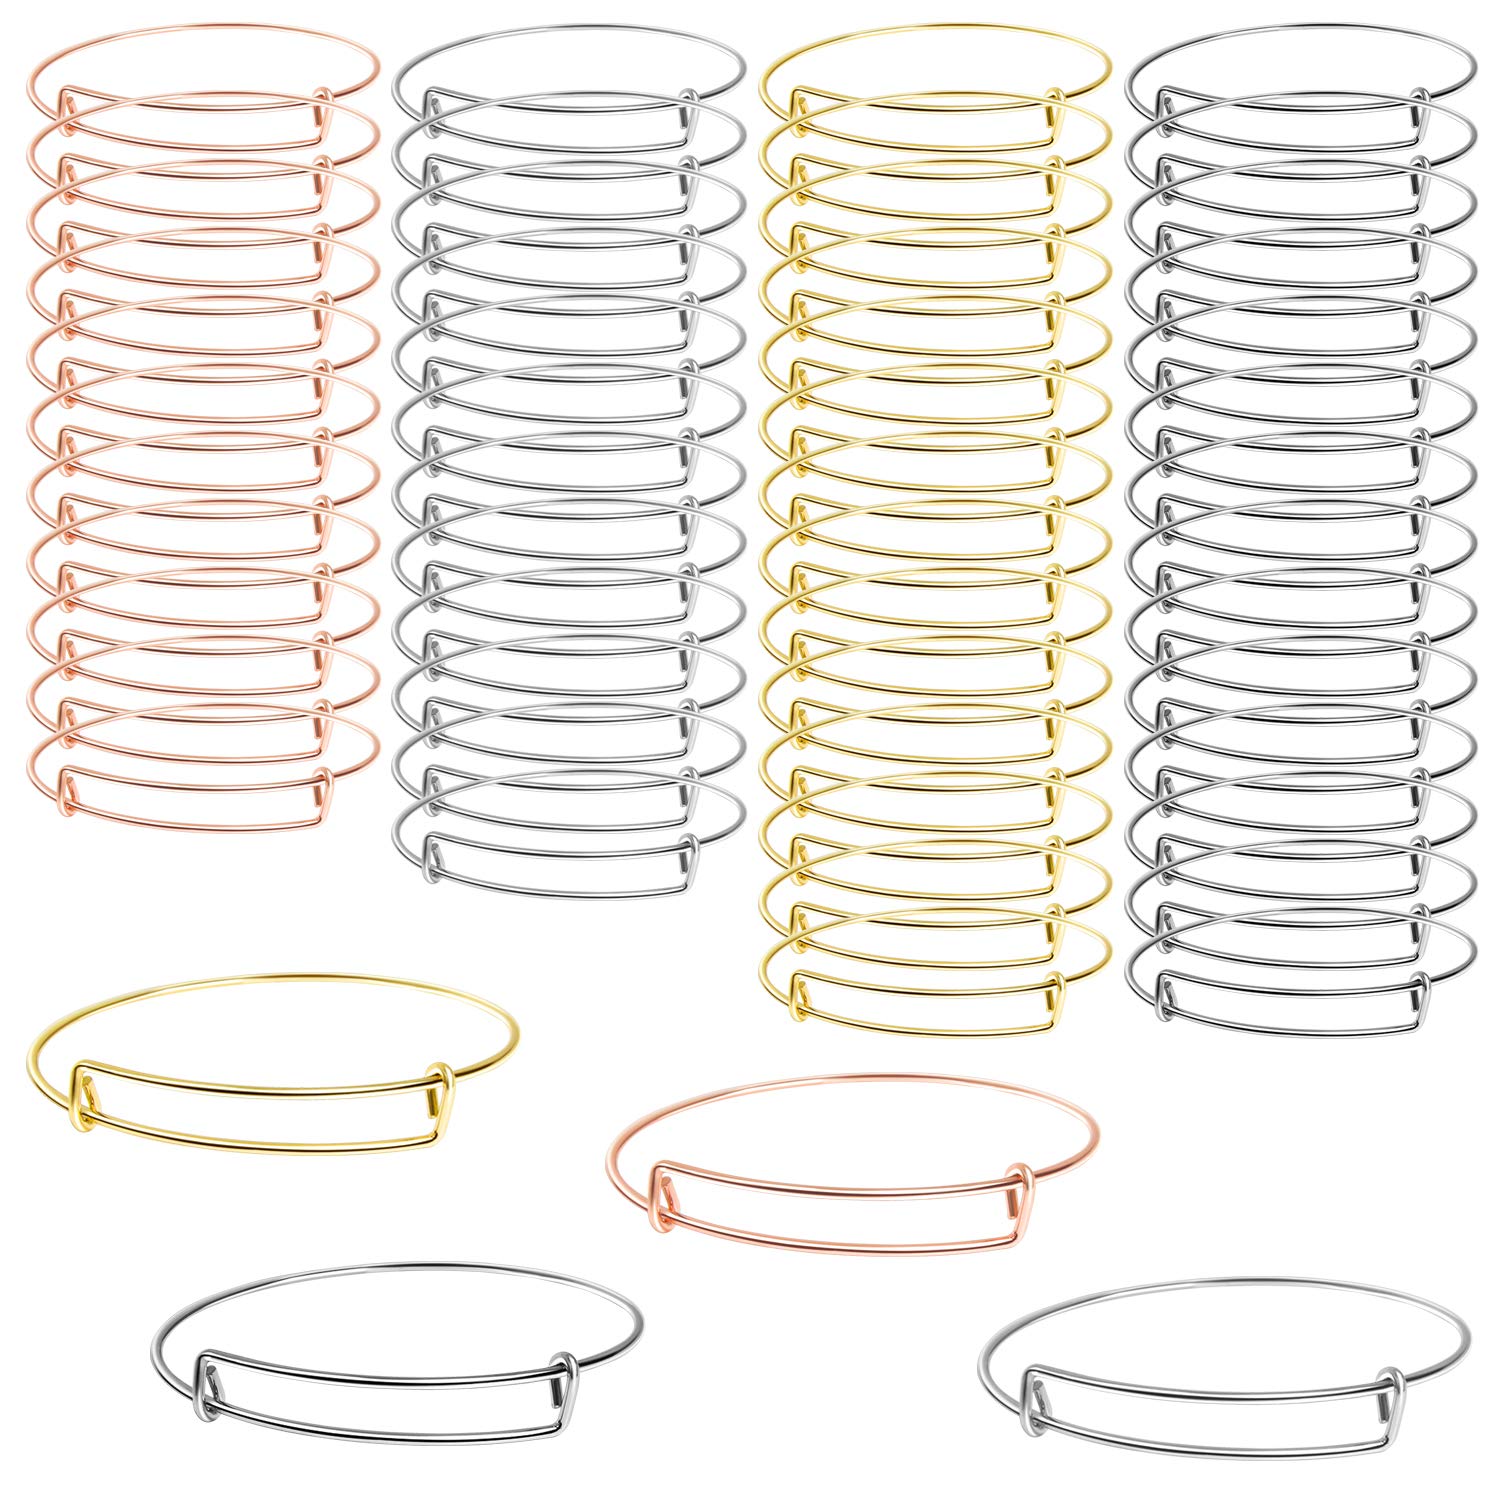 UPINS 100Pcs Expandable Blank Bangle Bracelets Adjustable Wire Bracelets for DIY Jewelry Making (Silver)